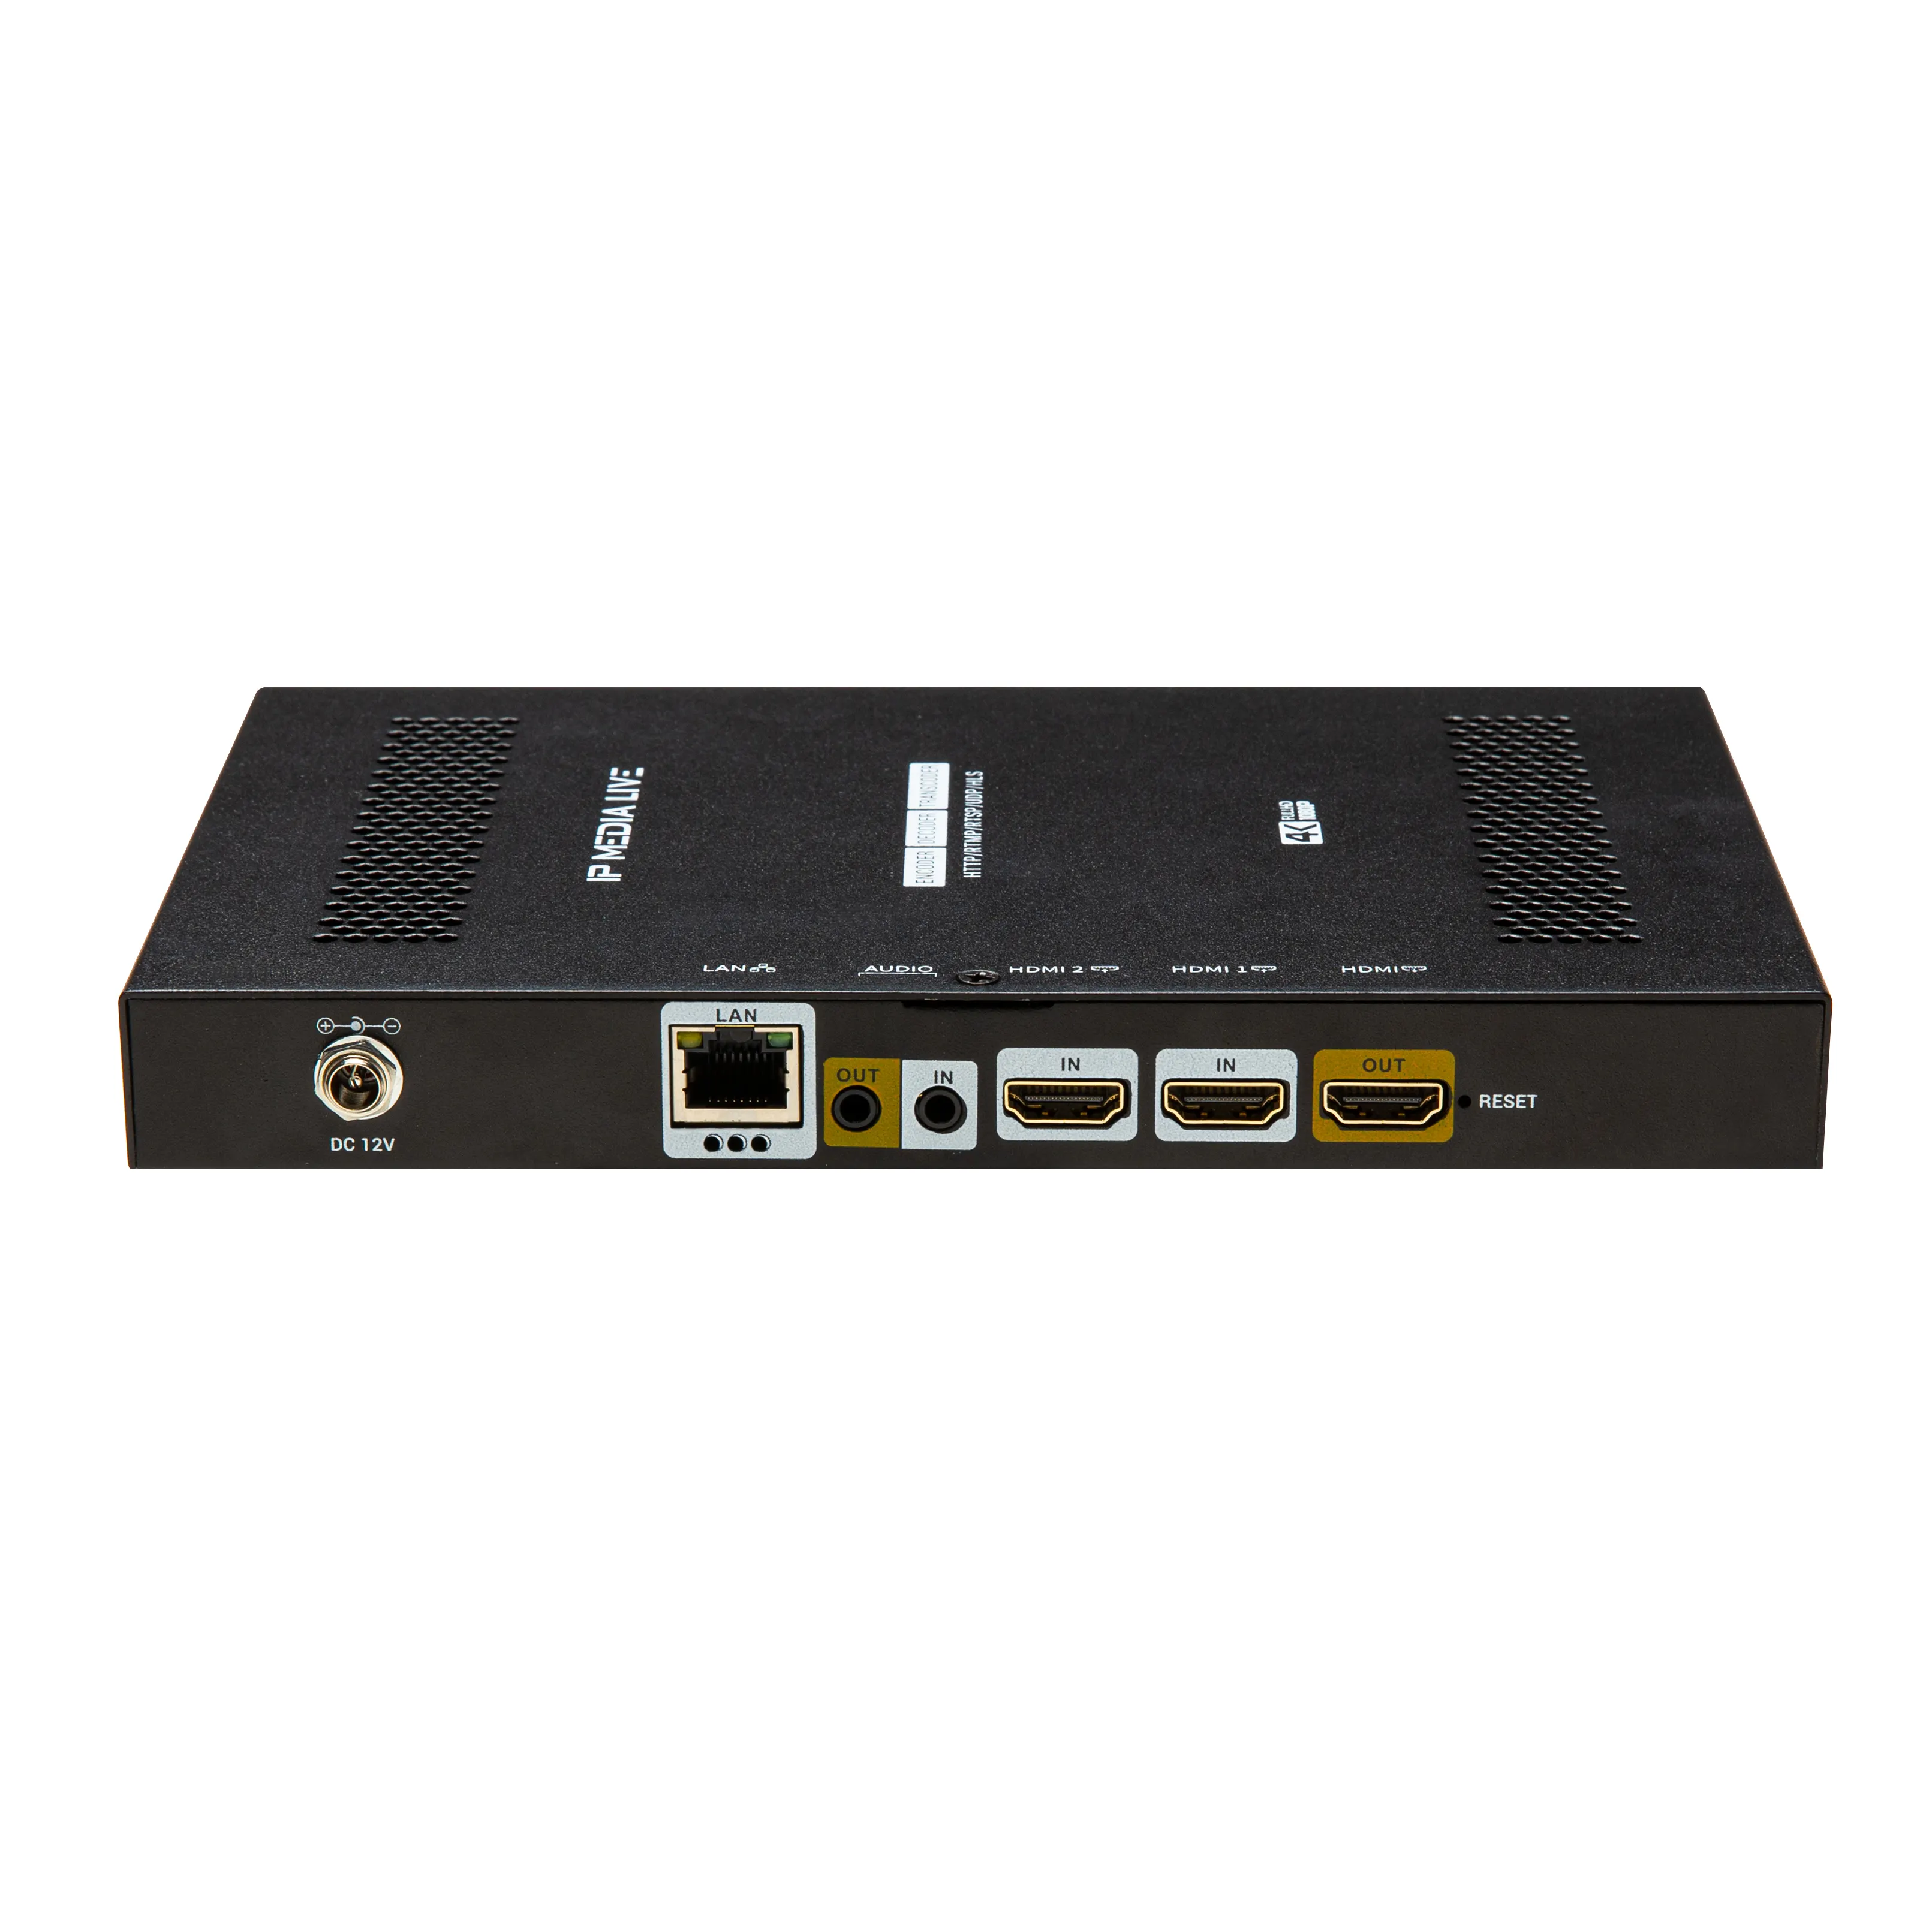 Codificador de Streaming IPTV 4K HEVC, decodificador de vídeo para IPTV OTT, solución de Hotel, compatible con UDP, HTTP, HLS, RTMP, RTSP, servidor IPTV, gran oferta